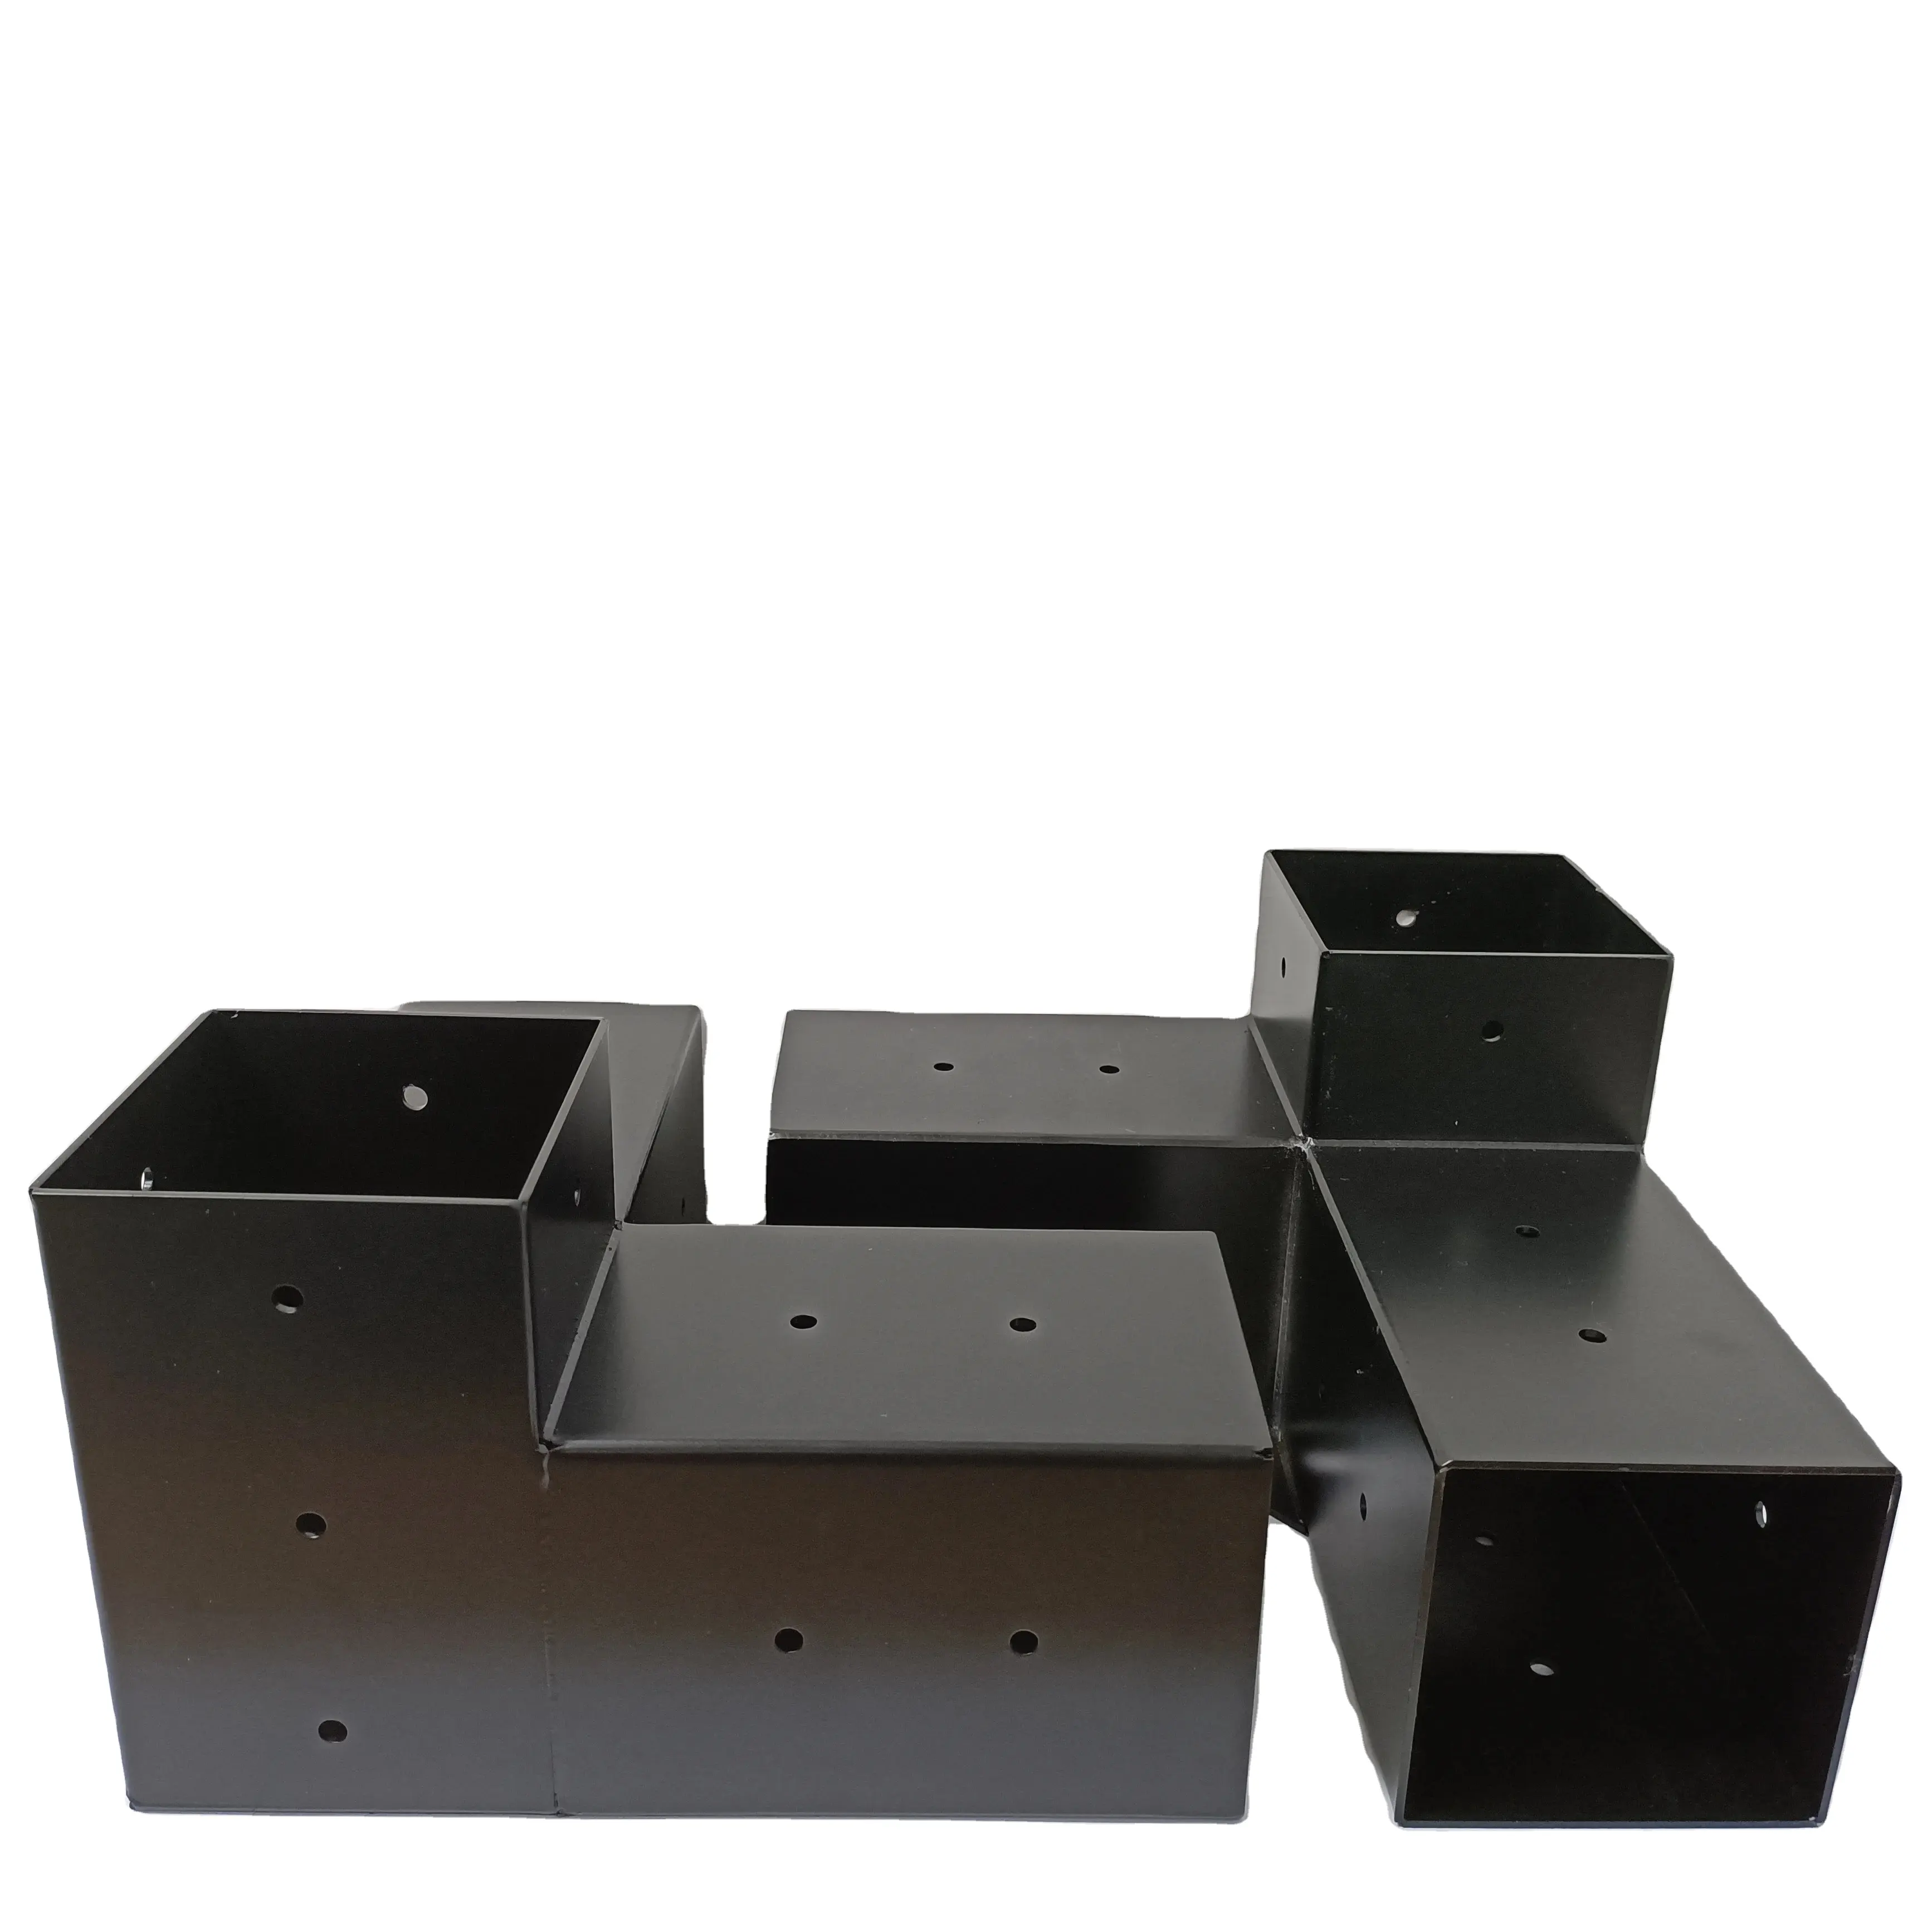 4x4 6x6 Pergola Kit Elevated Wood Stand Kit with Steel Brackets Modular Sizing Pergola Brackets